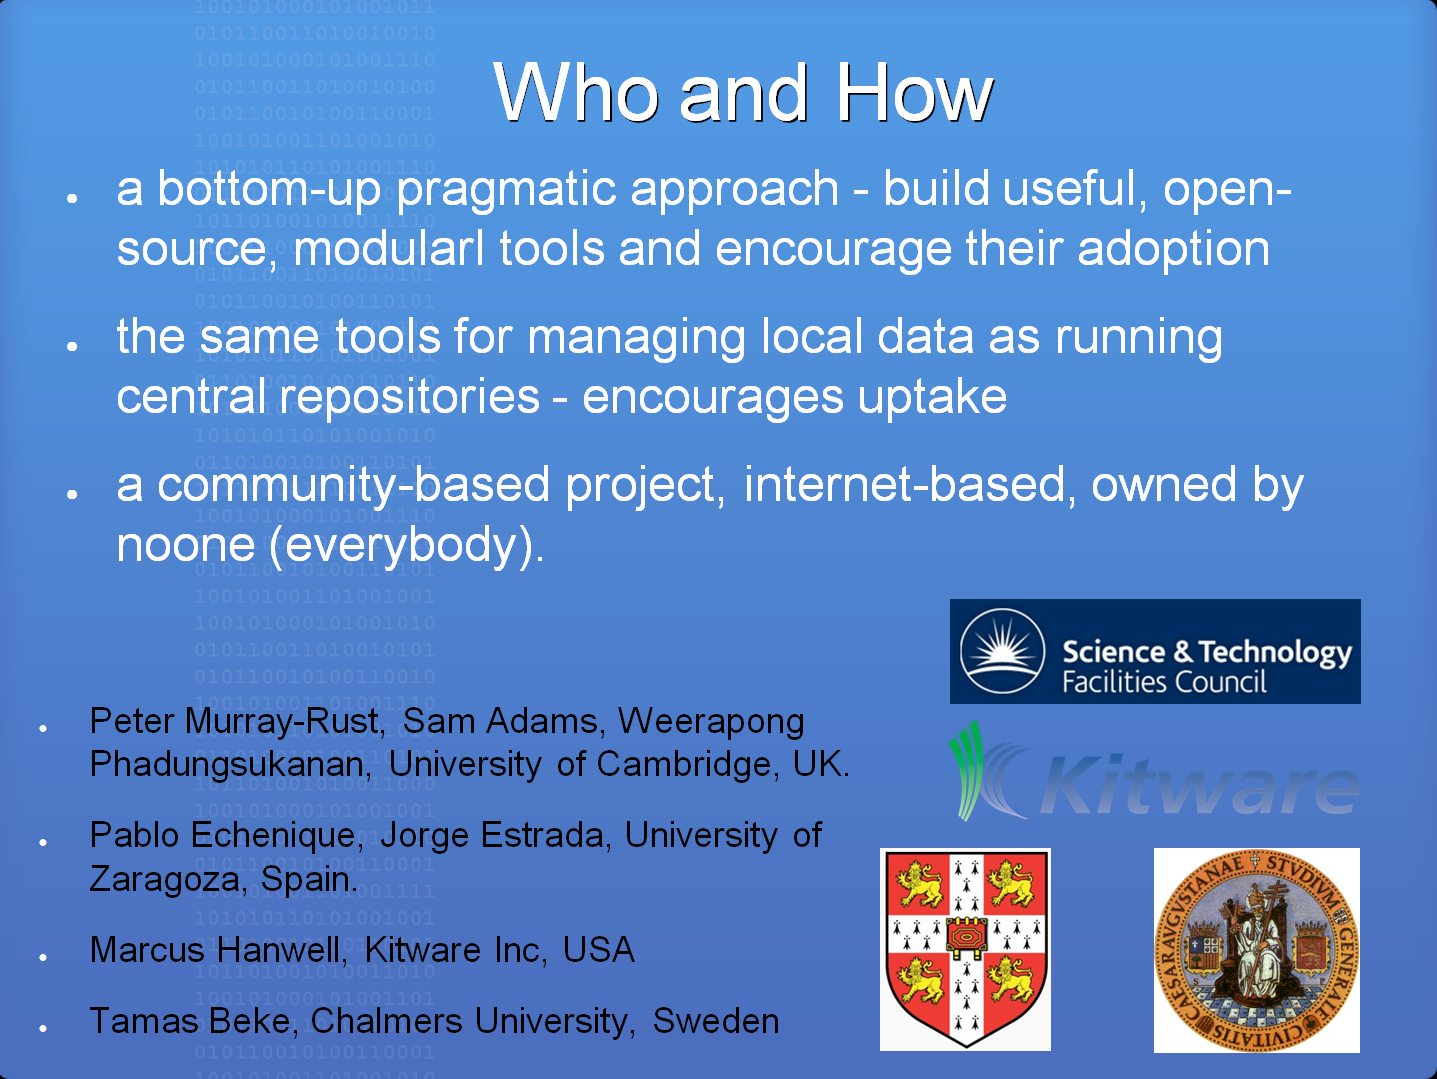 Third slide of Jens Thomas' rapid slide presentation